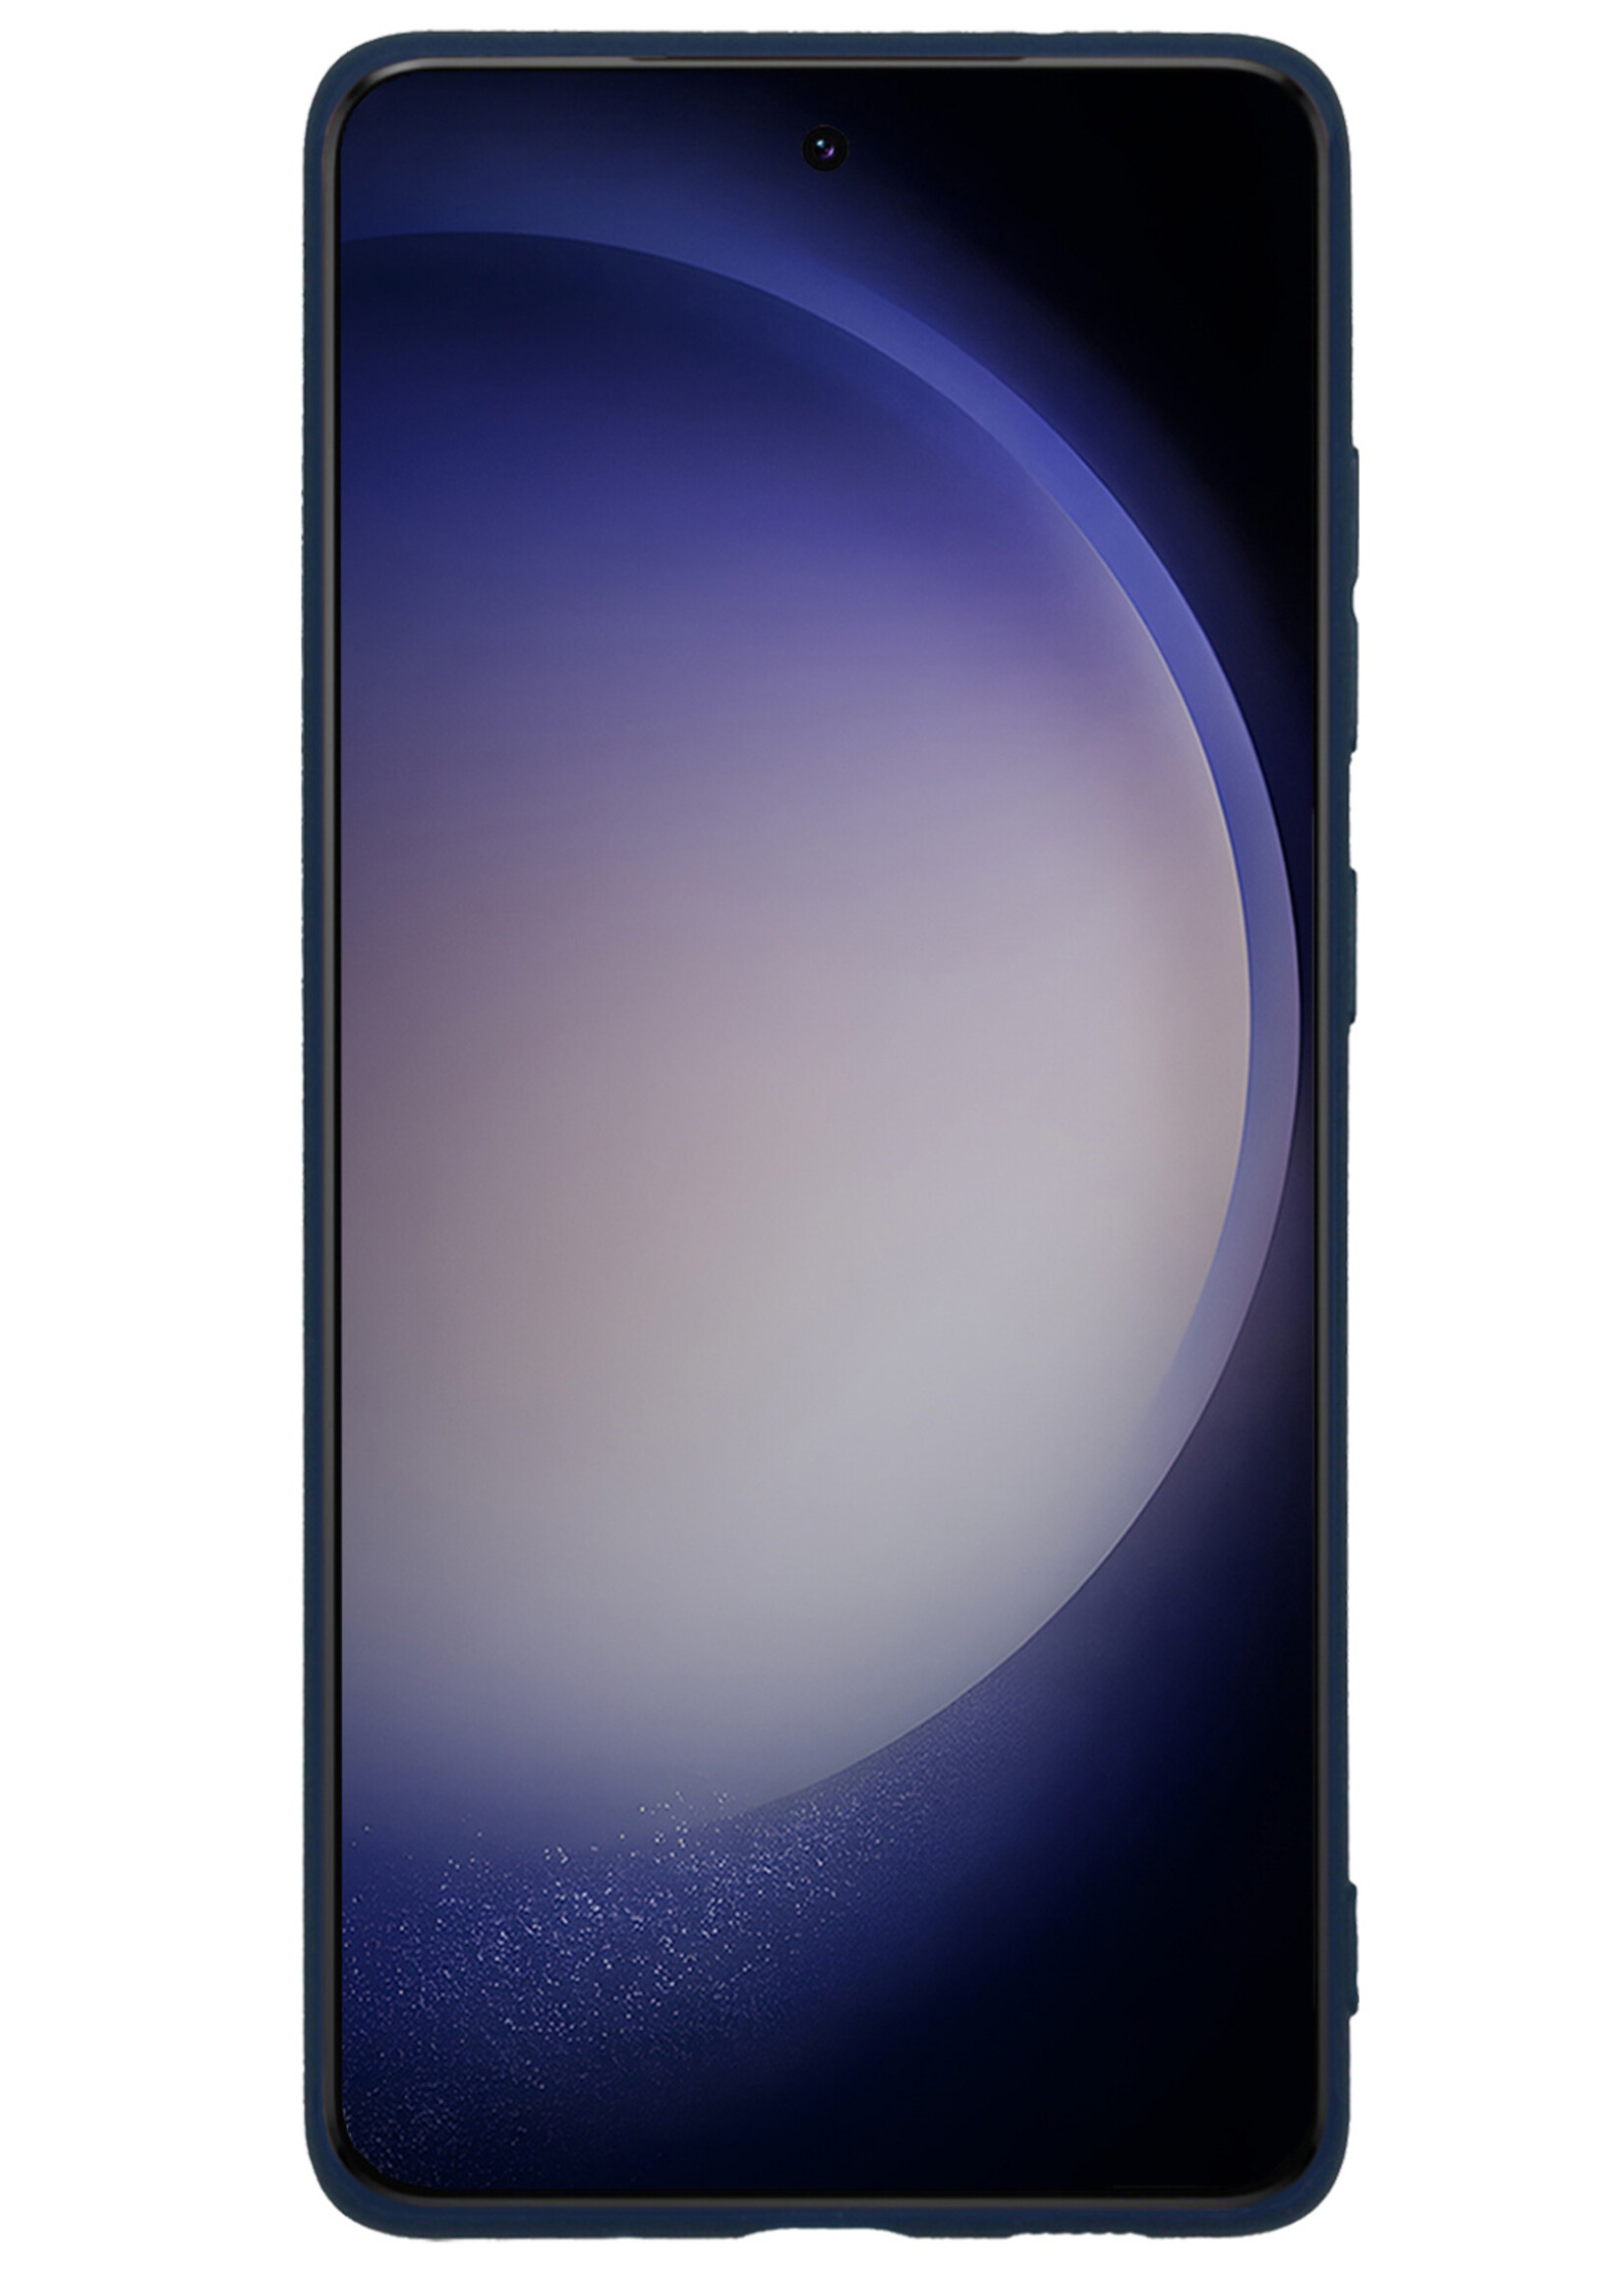 BTH Hoesje Geschikt voor Samsung S23 Ultra Hoesje Siliconen Case Hoes - Hoes Geschikt voor Samsung Galaxy S23 Ultra Hoes Cover Case - Donkerblauw - 2 PACK